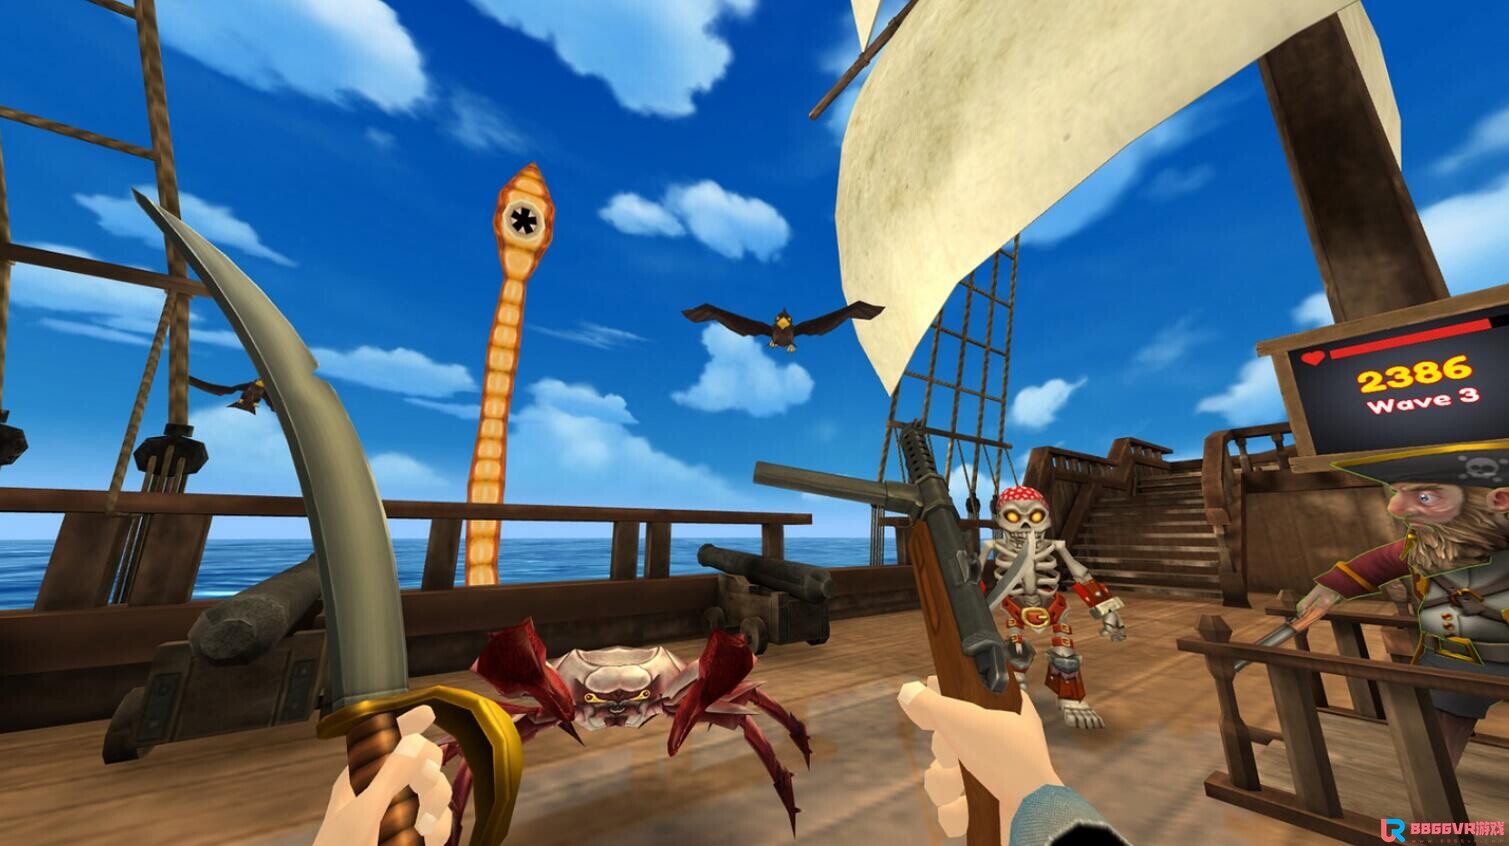 [Oculus quest] 甲板上的海盗（Pirates on Deck VR）9295 作者:yuanzi888 帖子ID:4854 